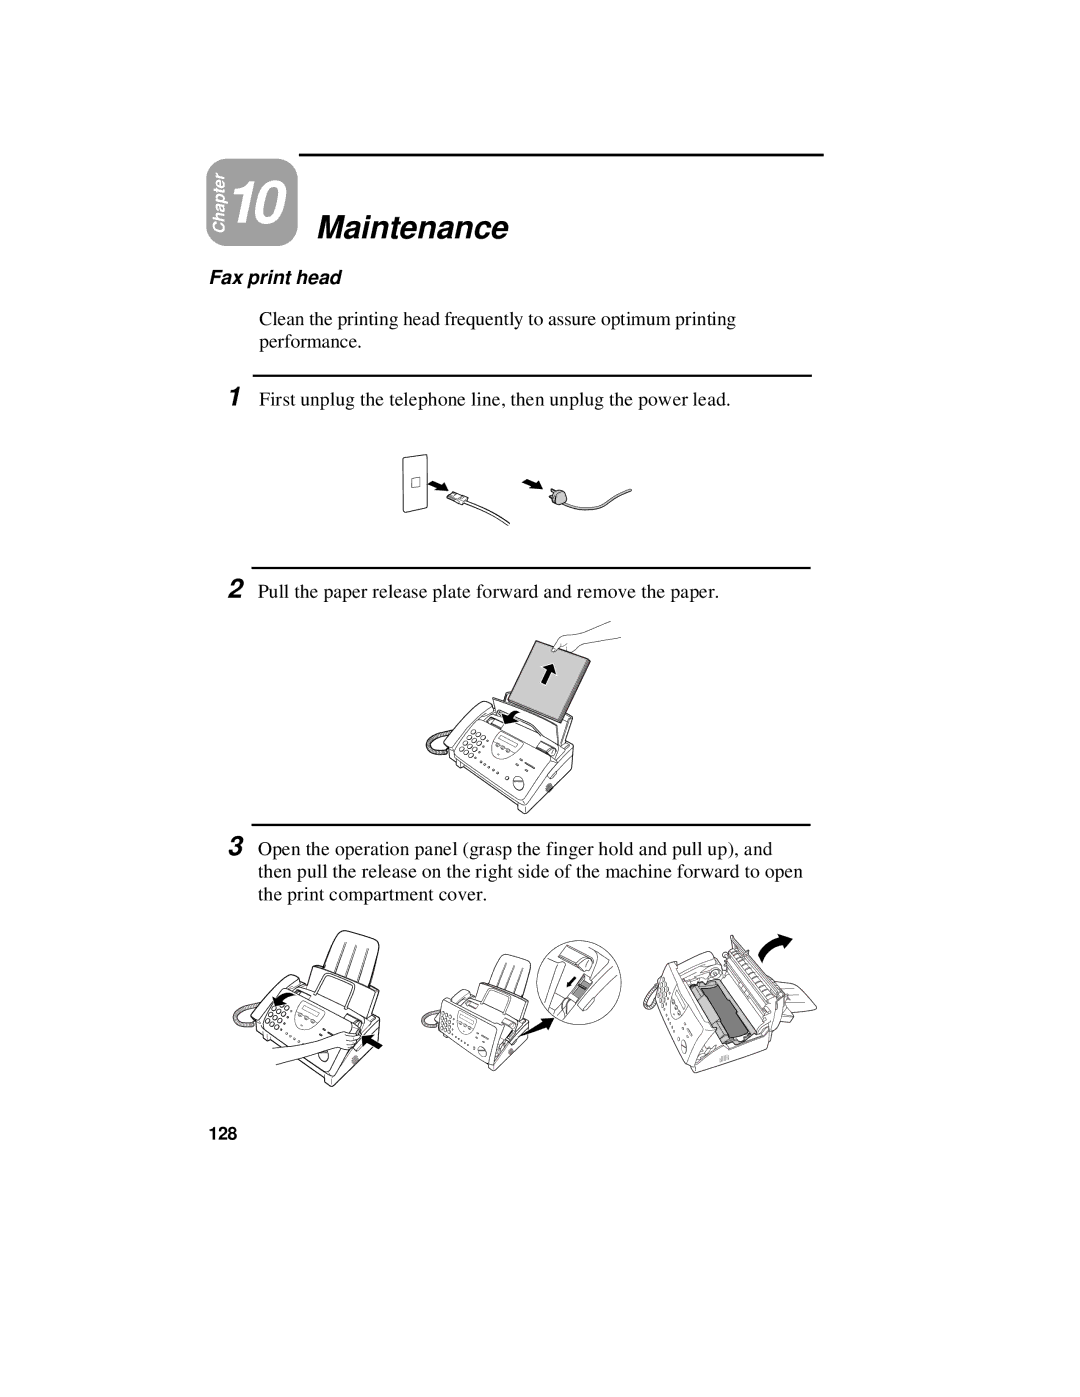 Sharp UX-470 operation manual Maintenance, Fax print head, 128 